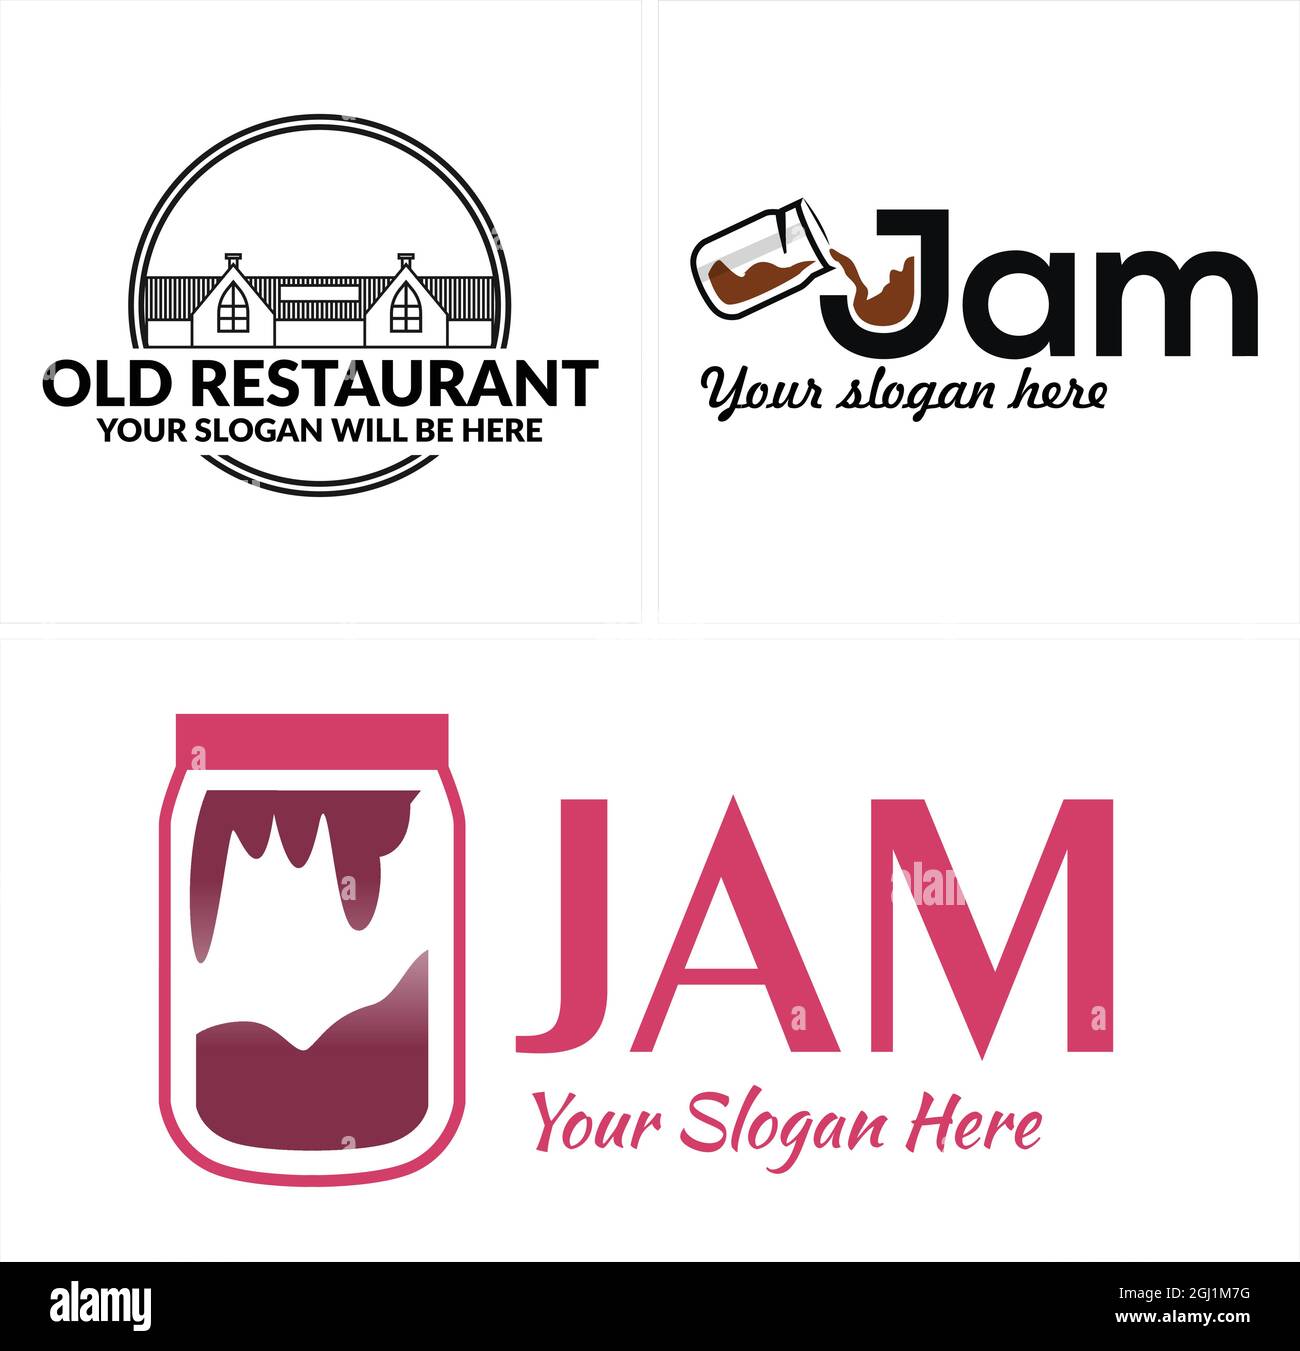 Restaurant jam healthy food logo design Stock Vector